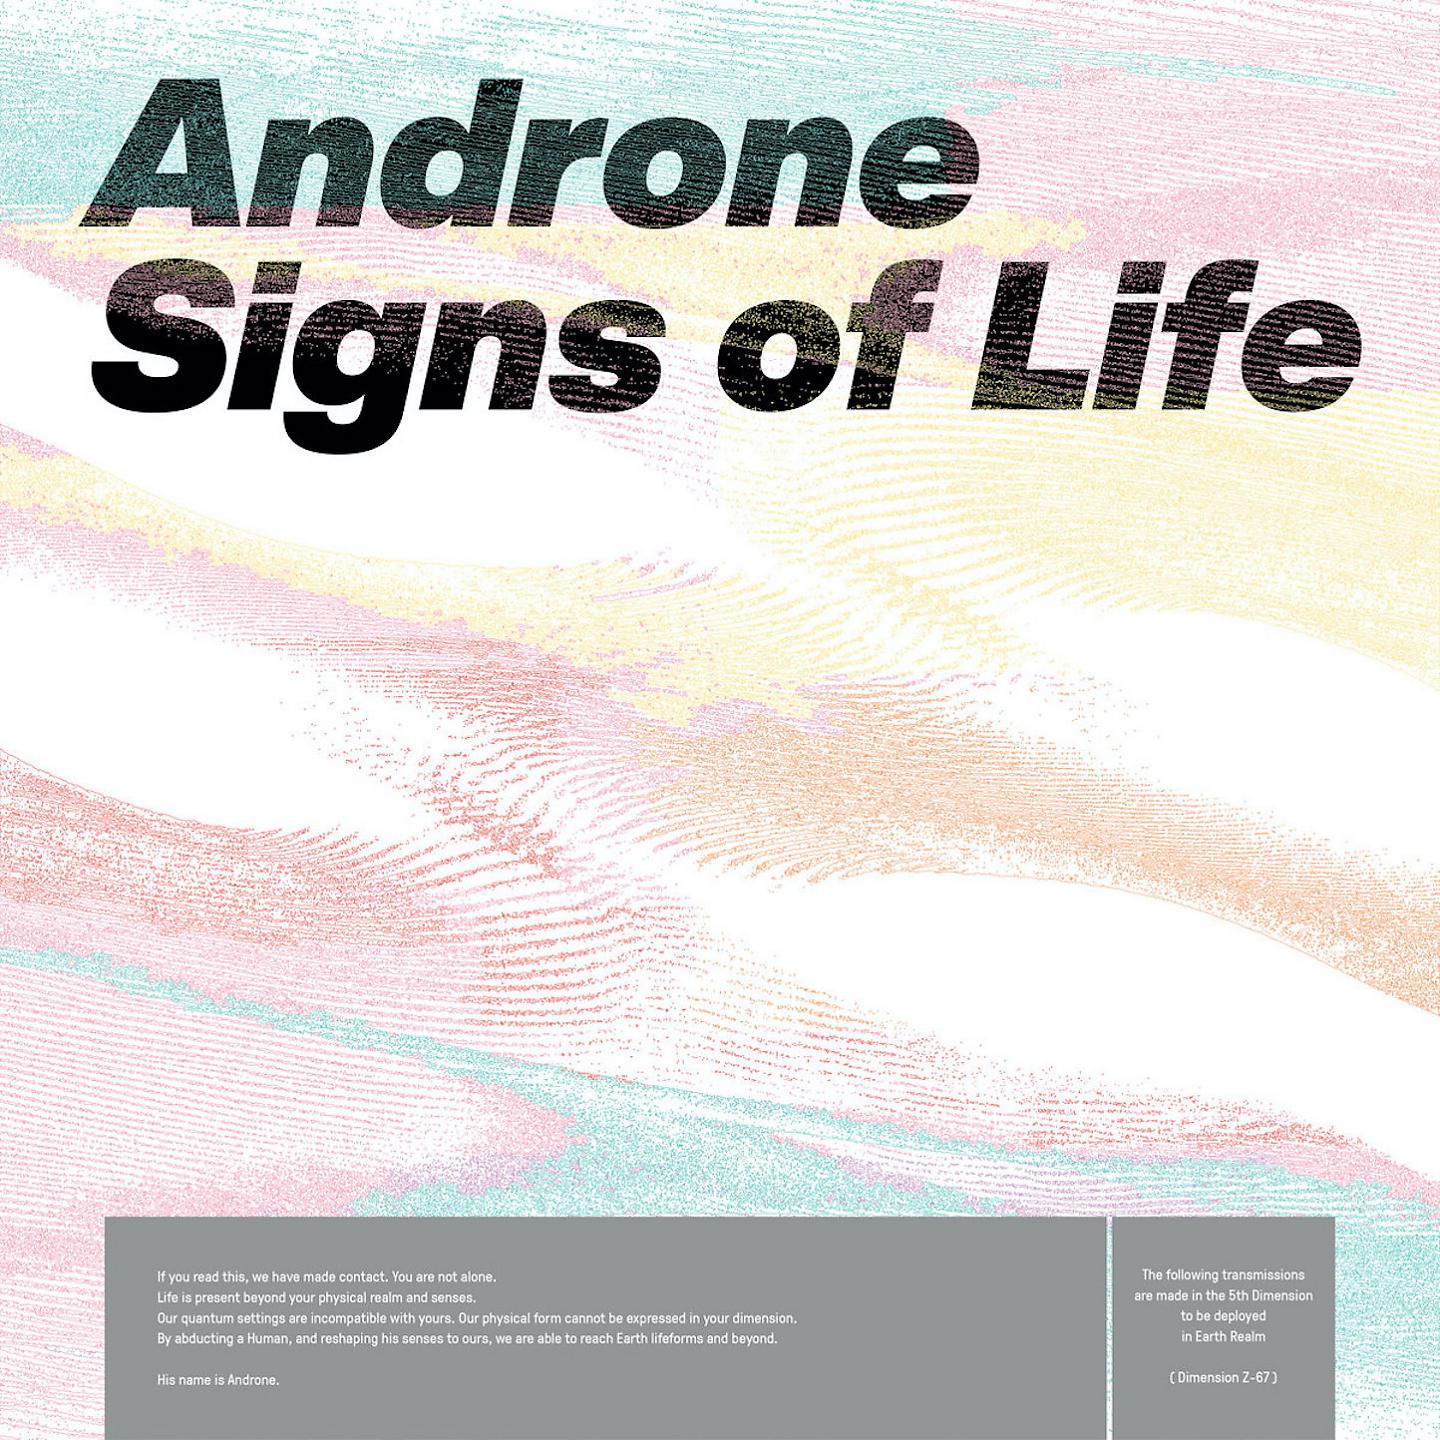 Постер альбома Signs of Life